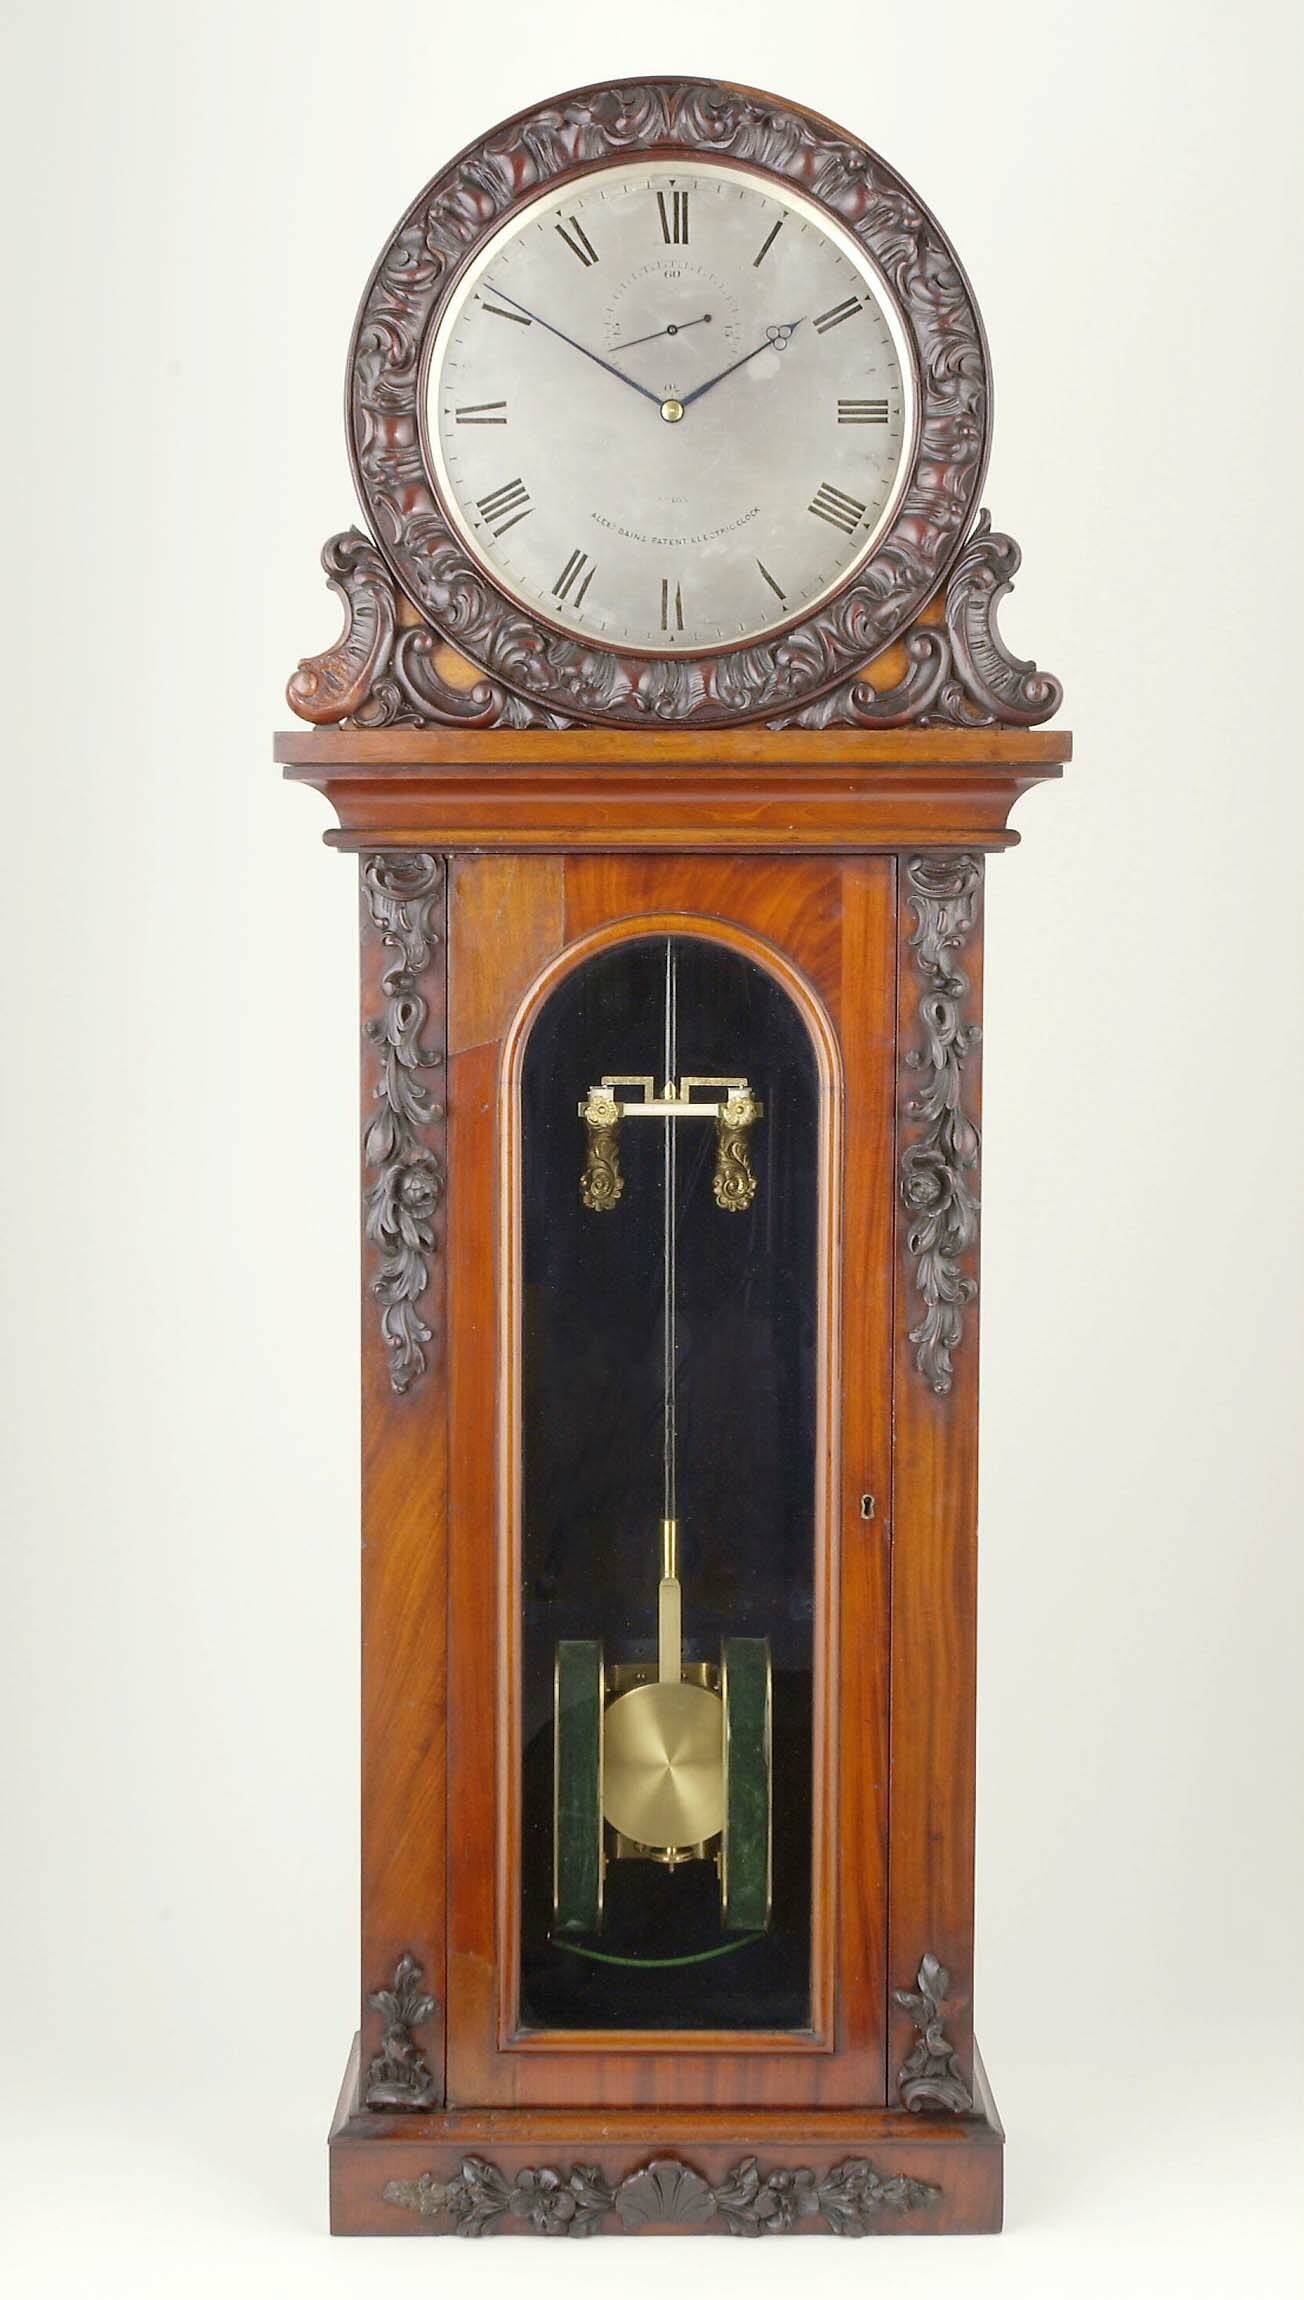 Regulator, Alexander Bain, London, um 1845 (Deutsches Uhrenmuseum CC BY-SA)